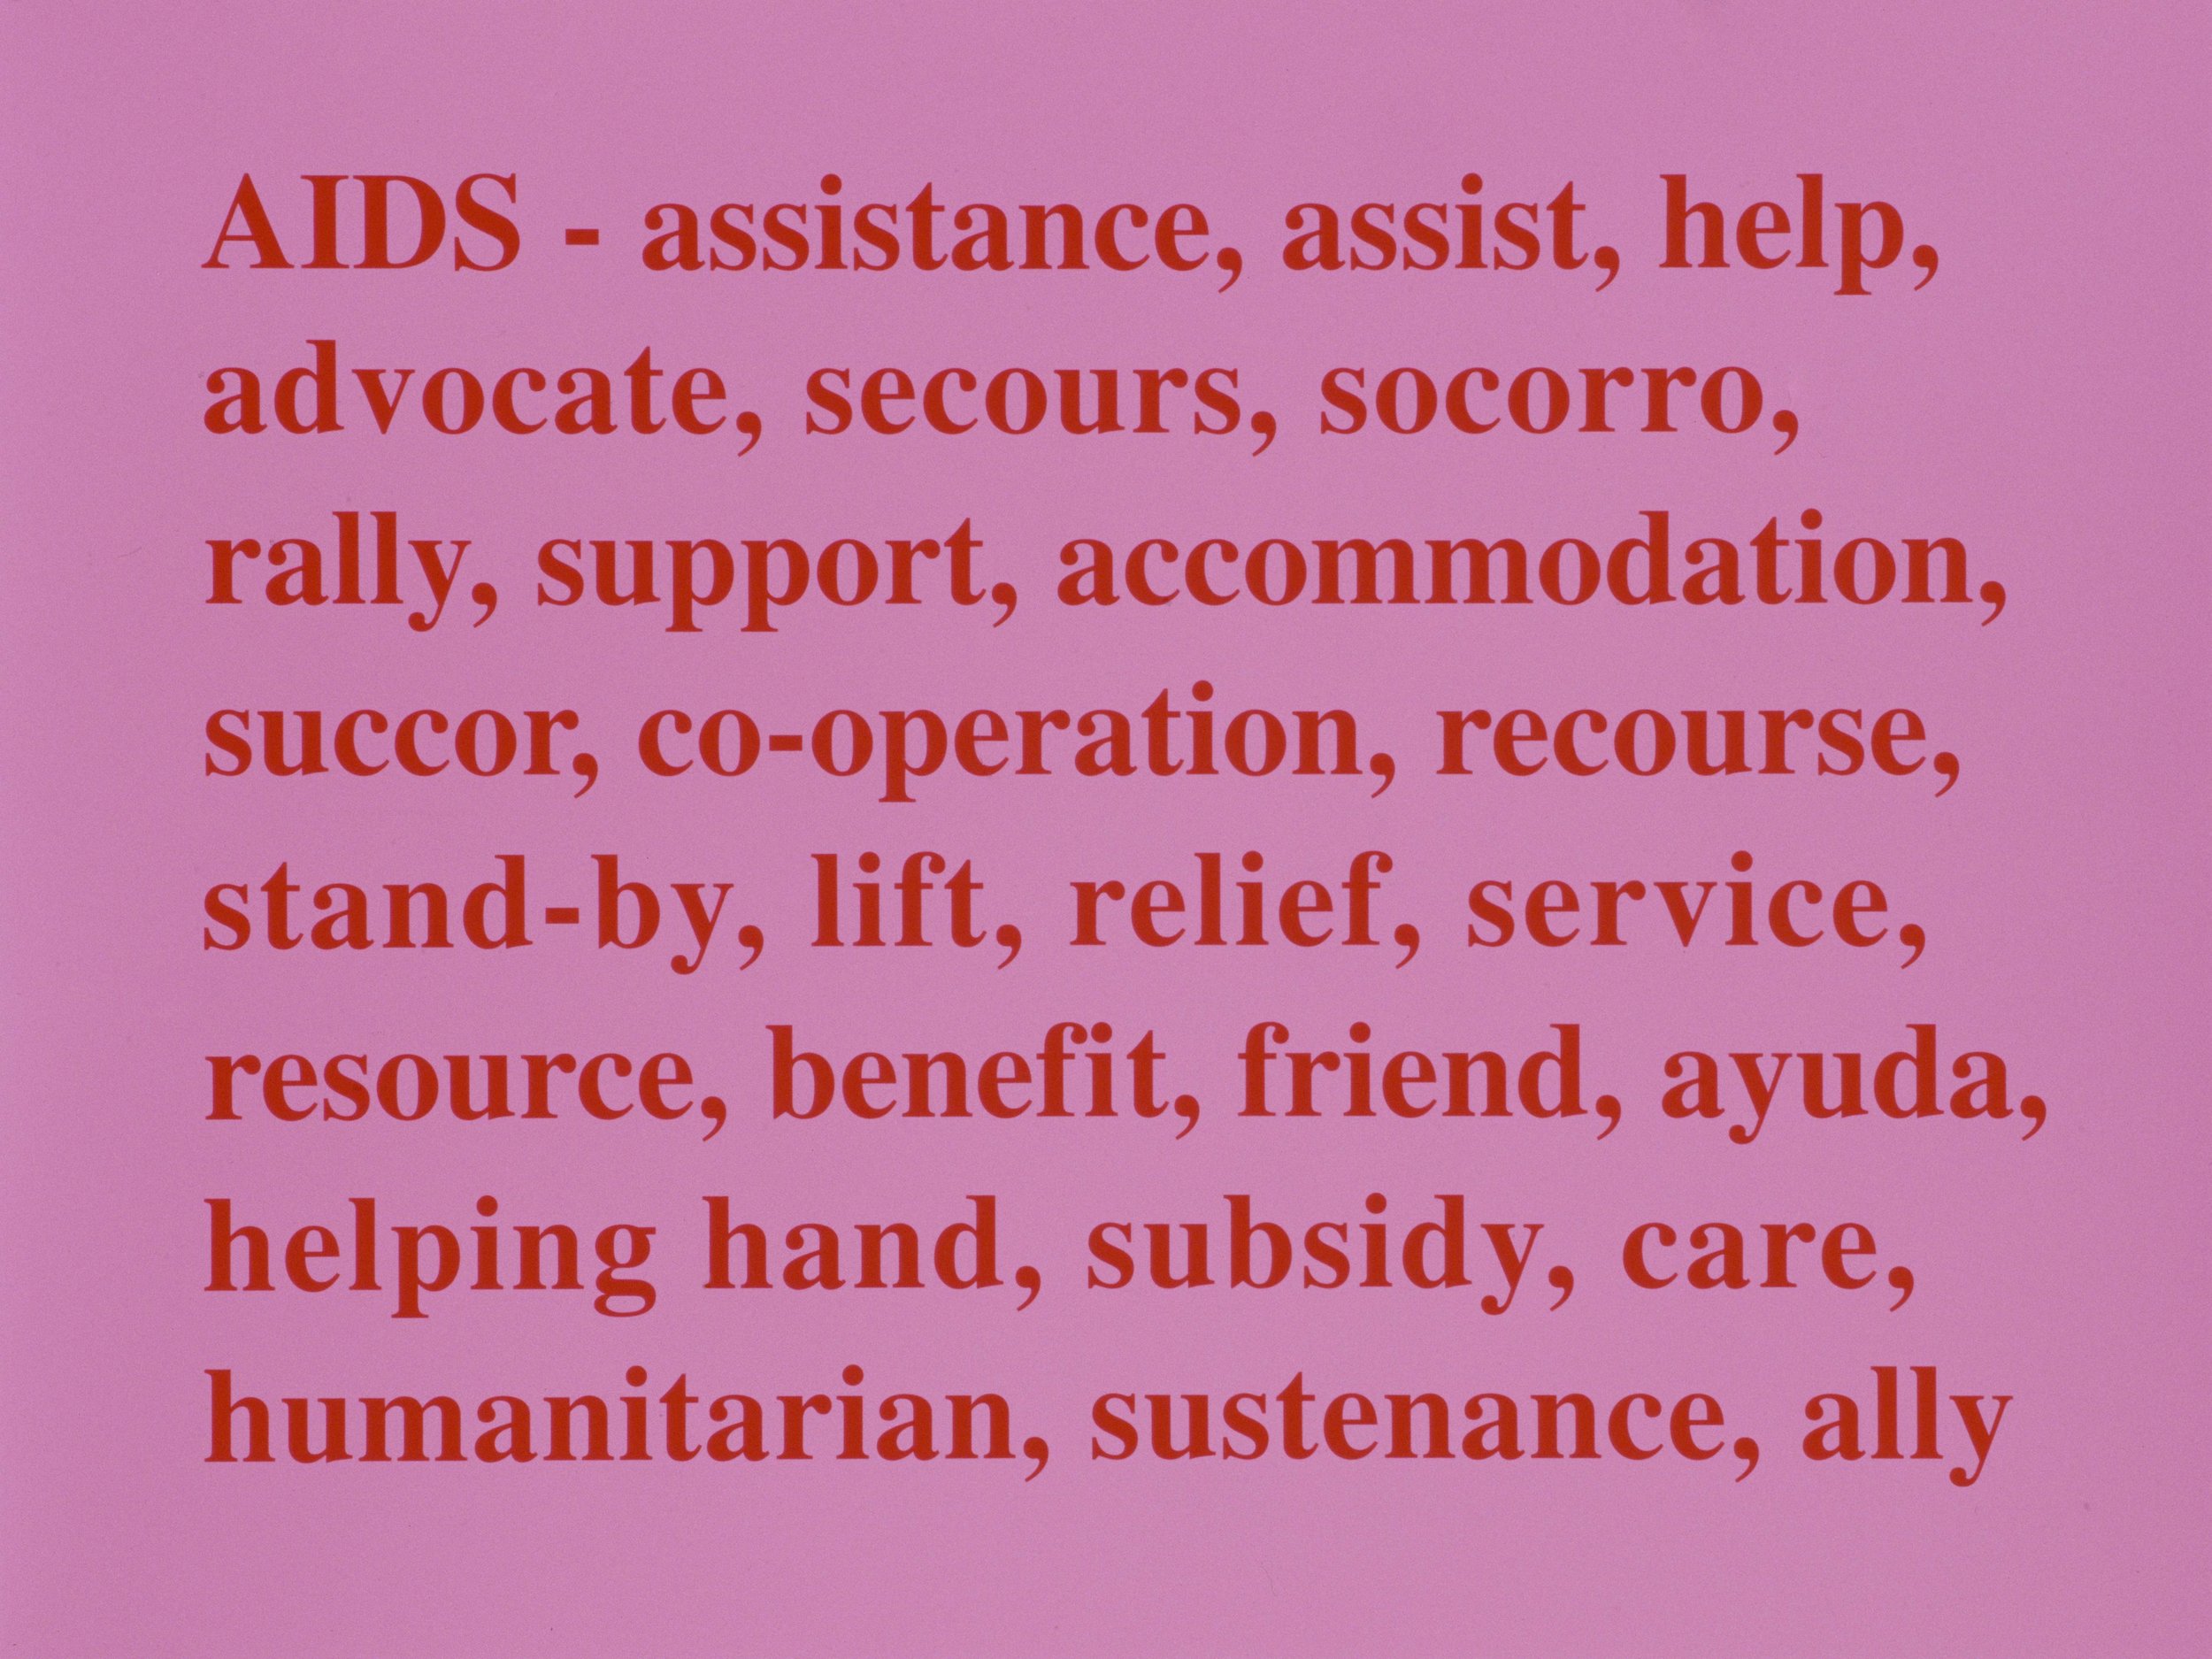 AIDS, 1991/1994